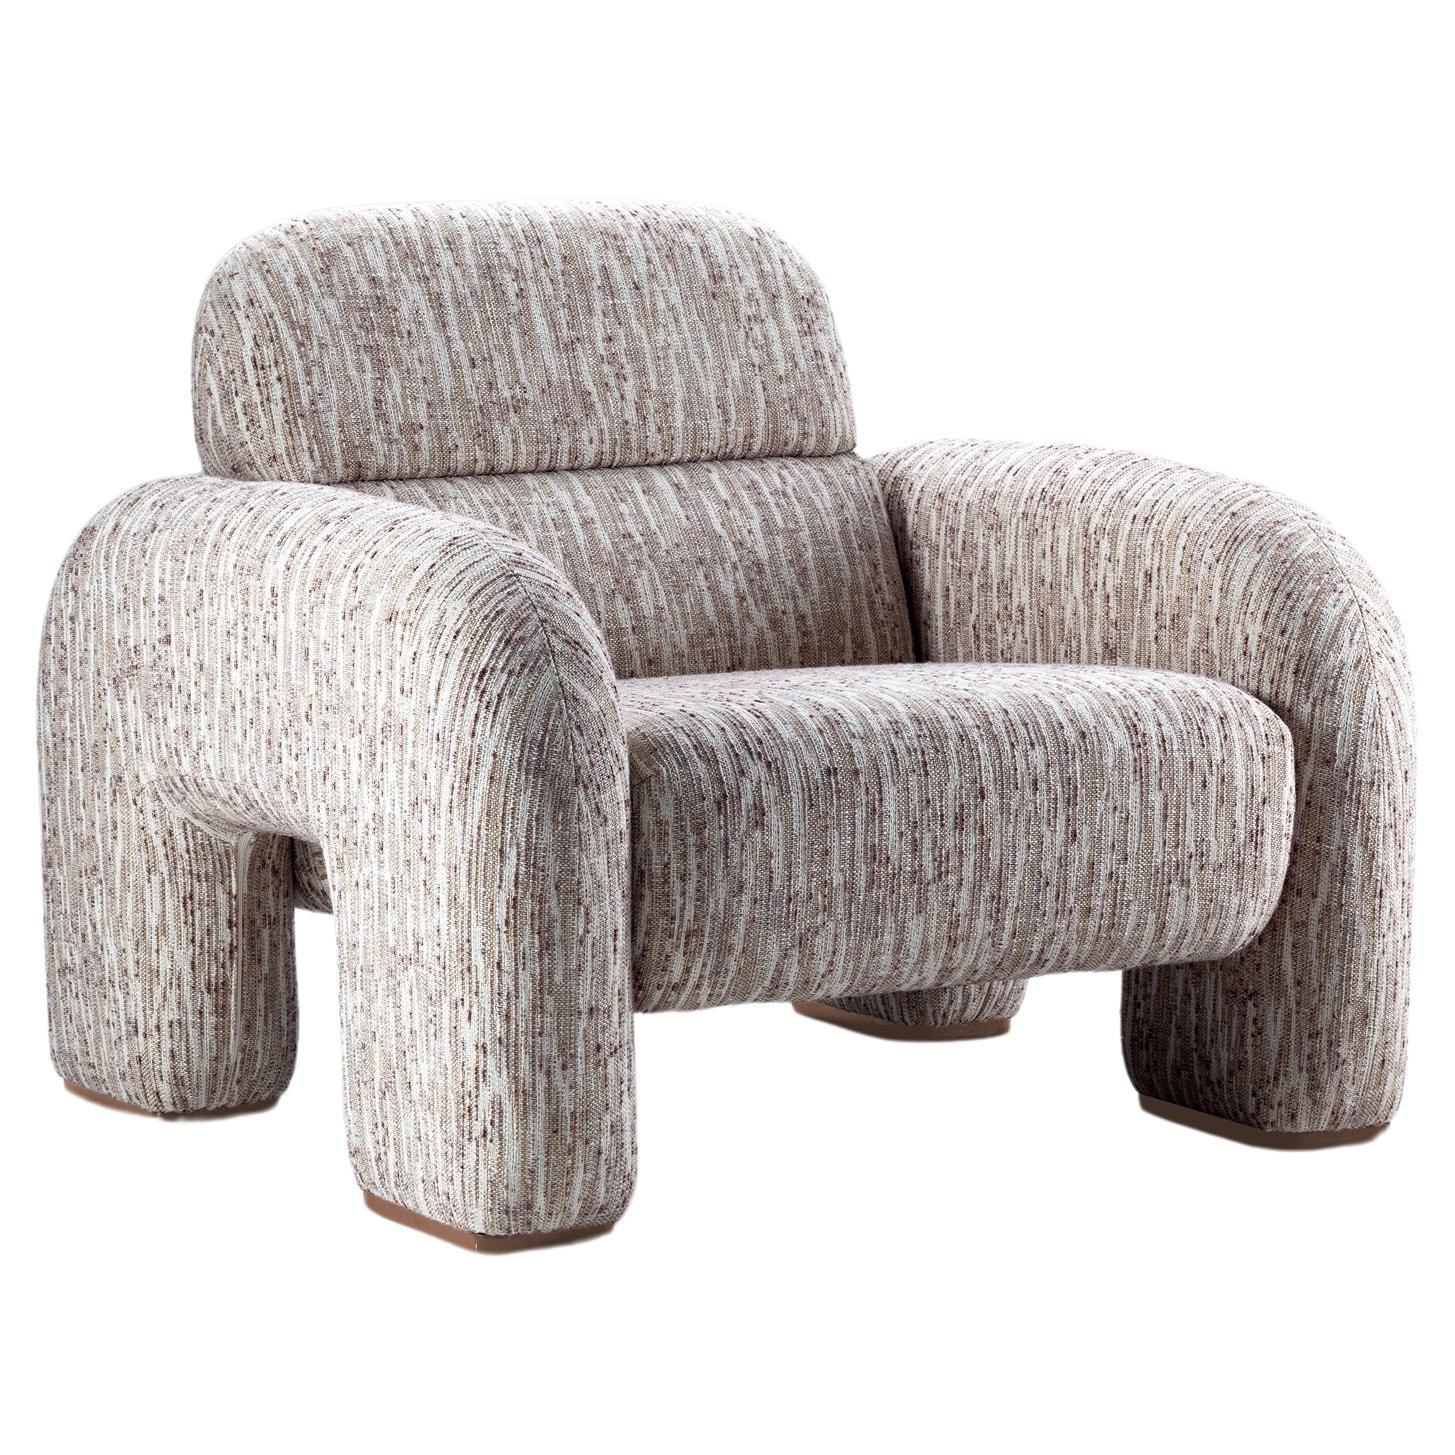 DOOQ! NEW! Organic Modernist Vertigo Armchair in Beige and Grey Fabric